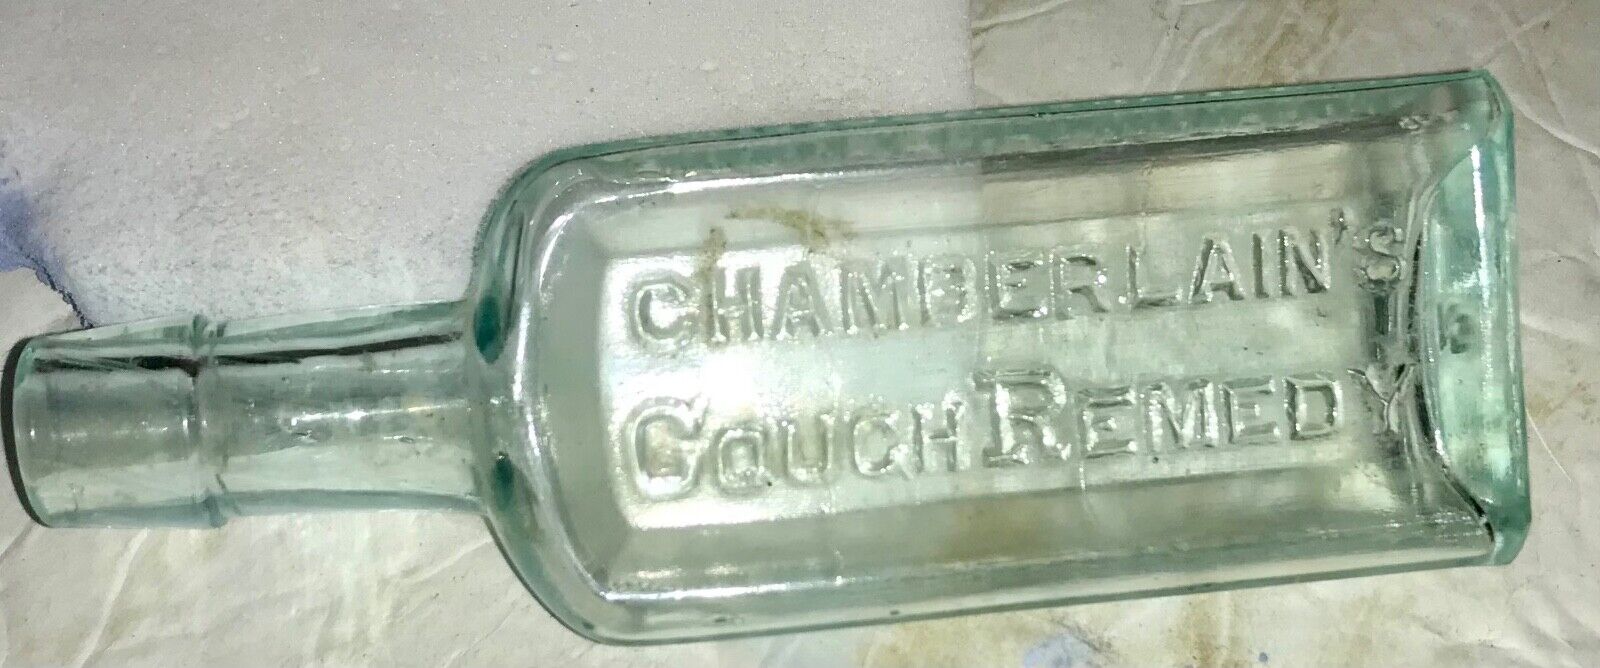 Antique Chamberlain’s Cough Remedy Bottle